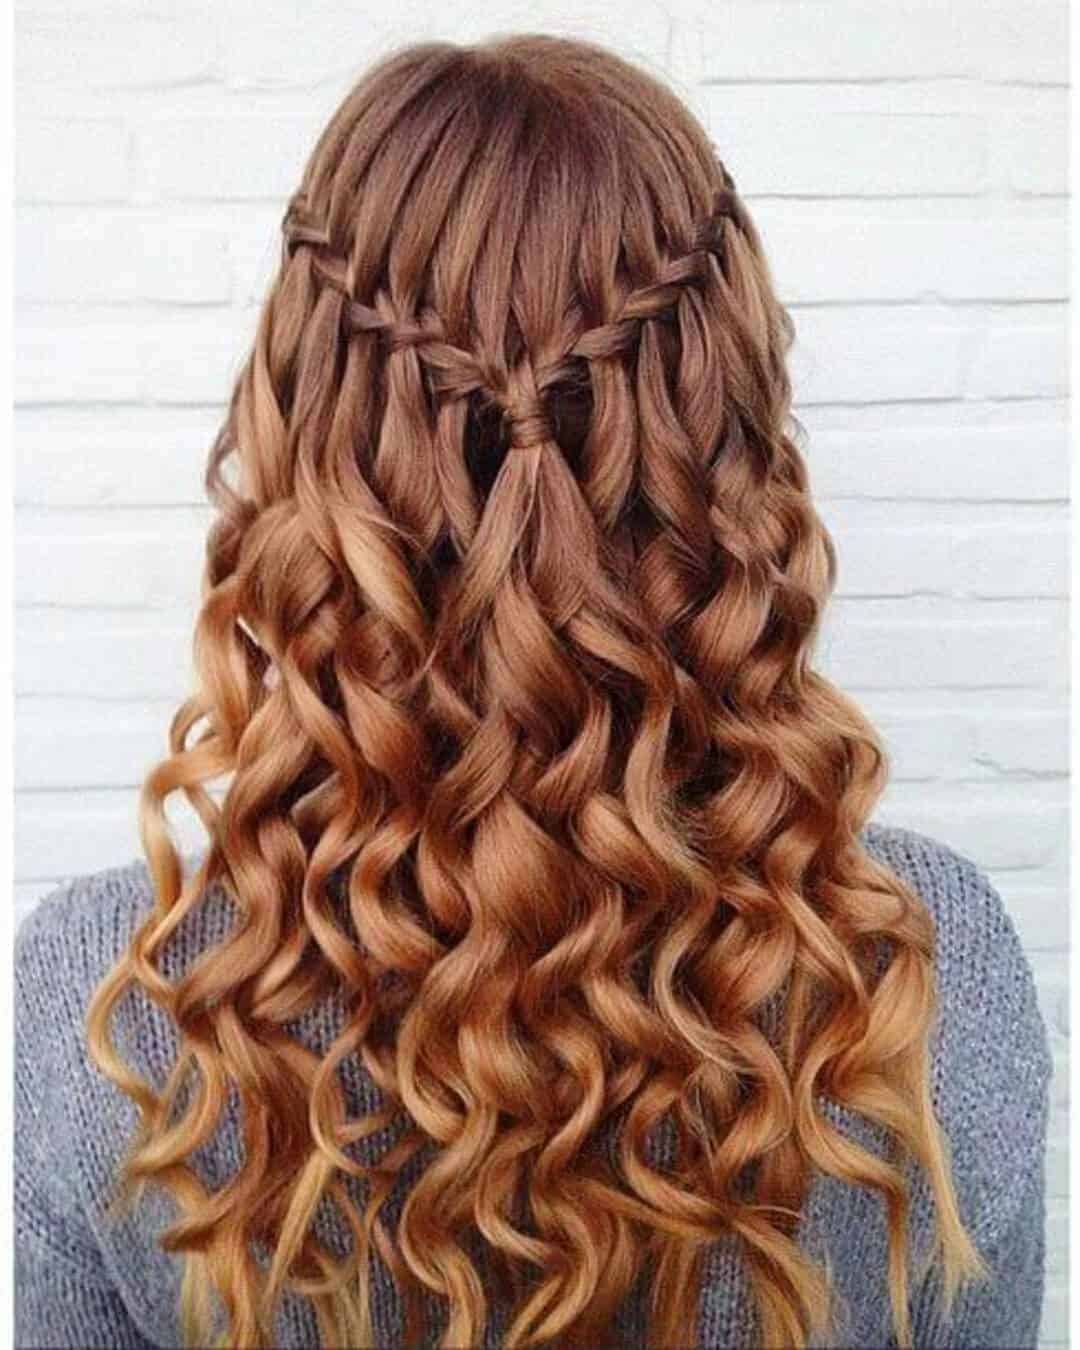 Waterfall braids